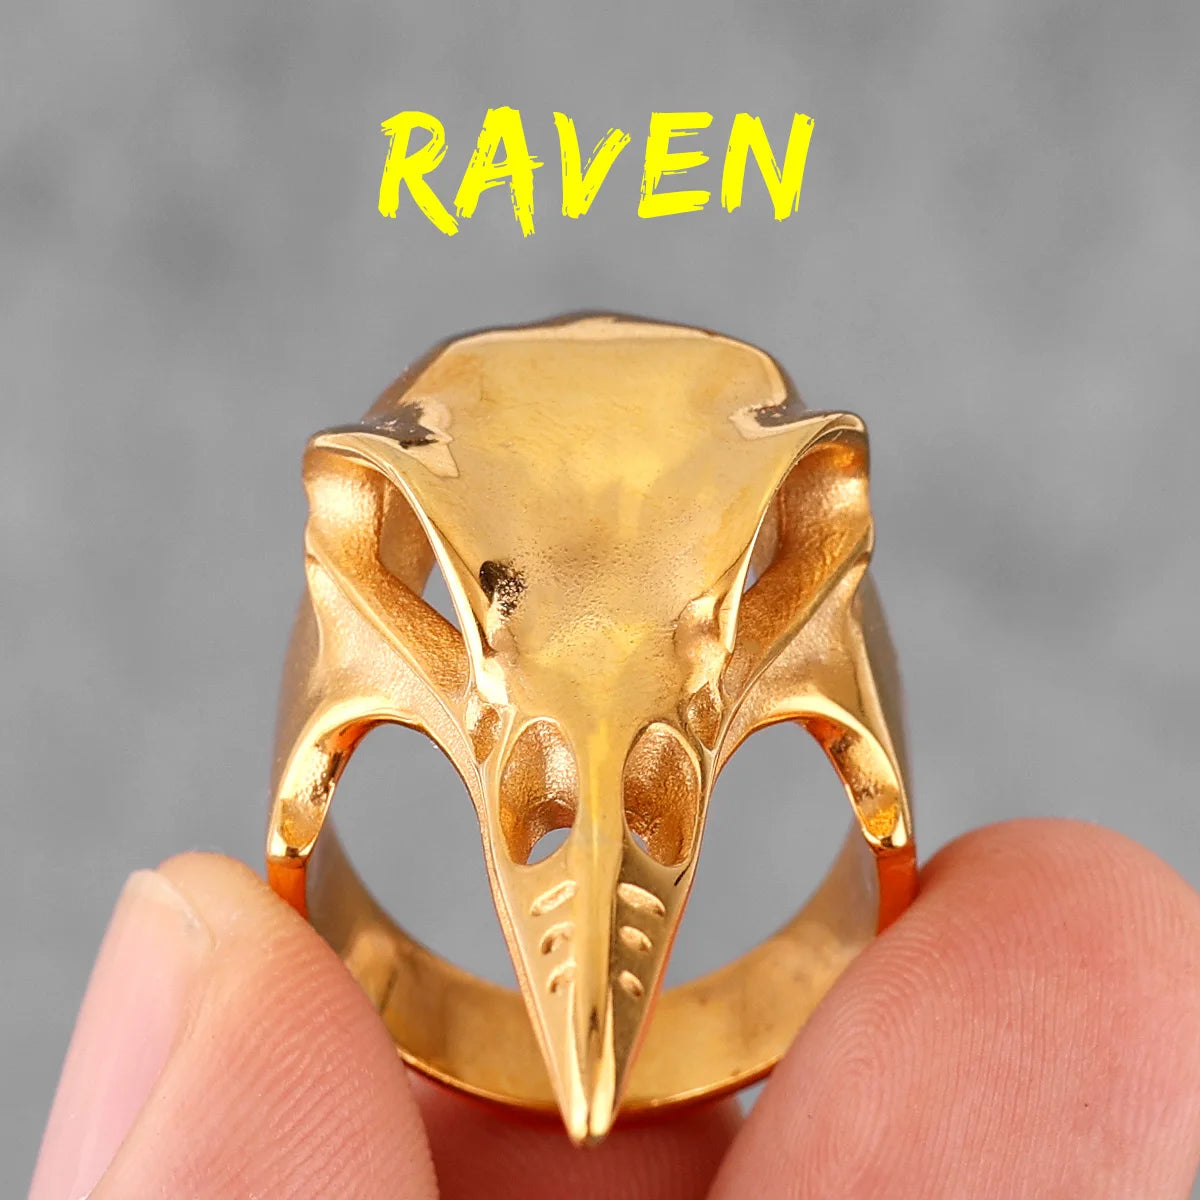 Viking Raven Skull Stainless Steel Mens Rings Punk Amulet Gothic for Male Boyfriend Biker Jewelry Creativity Gift R705-Gold